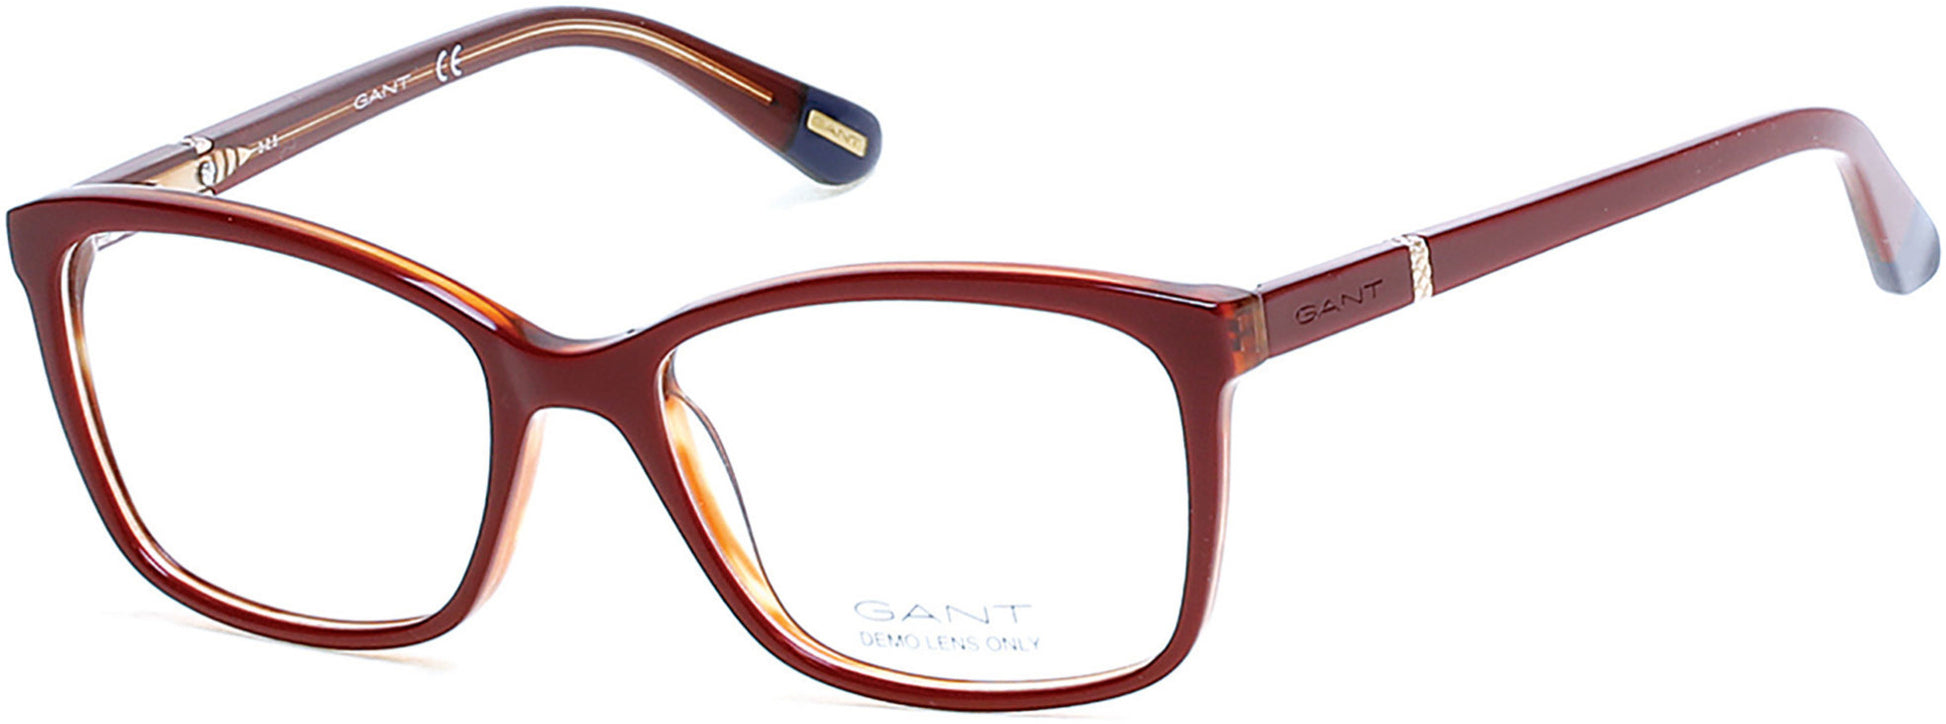 Gant GA4070 Geometric Eyeglasses 069-001 - Shiny Black